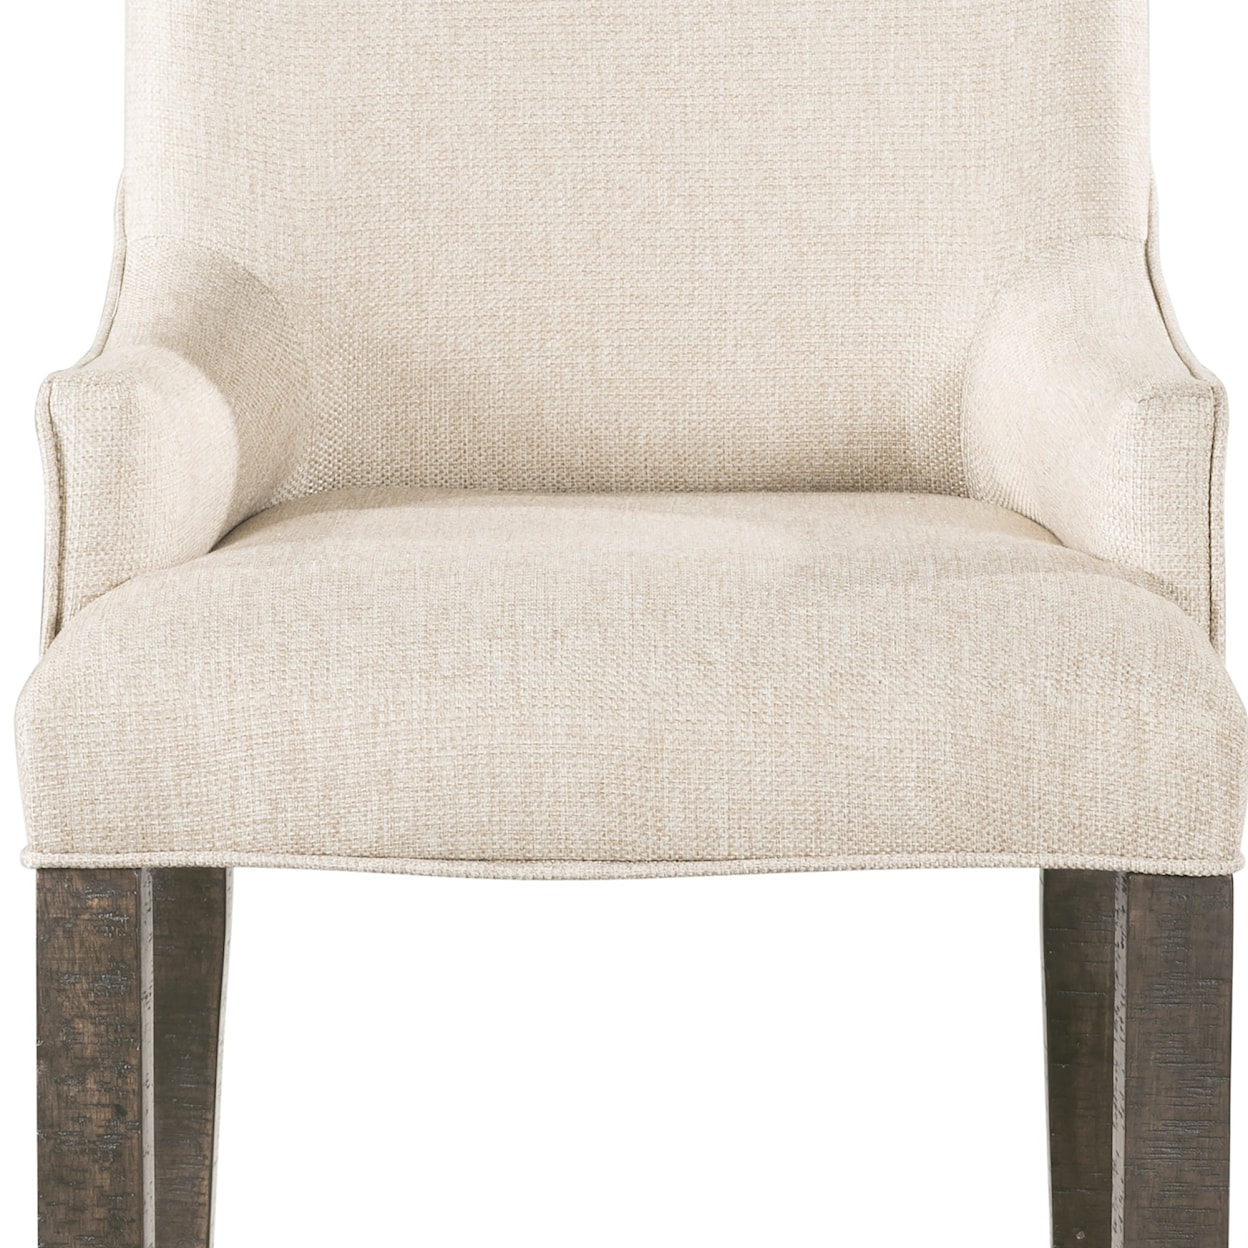 Elements International Finn Upholstered Arm Chair